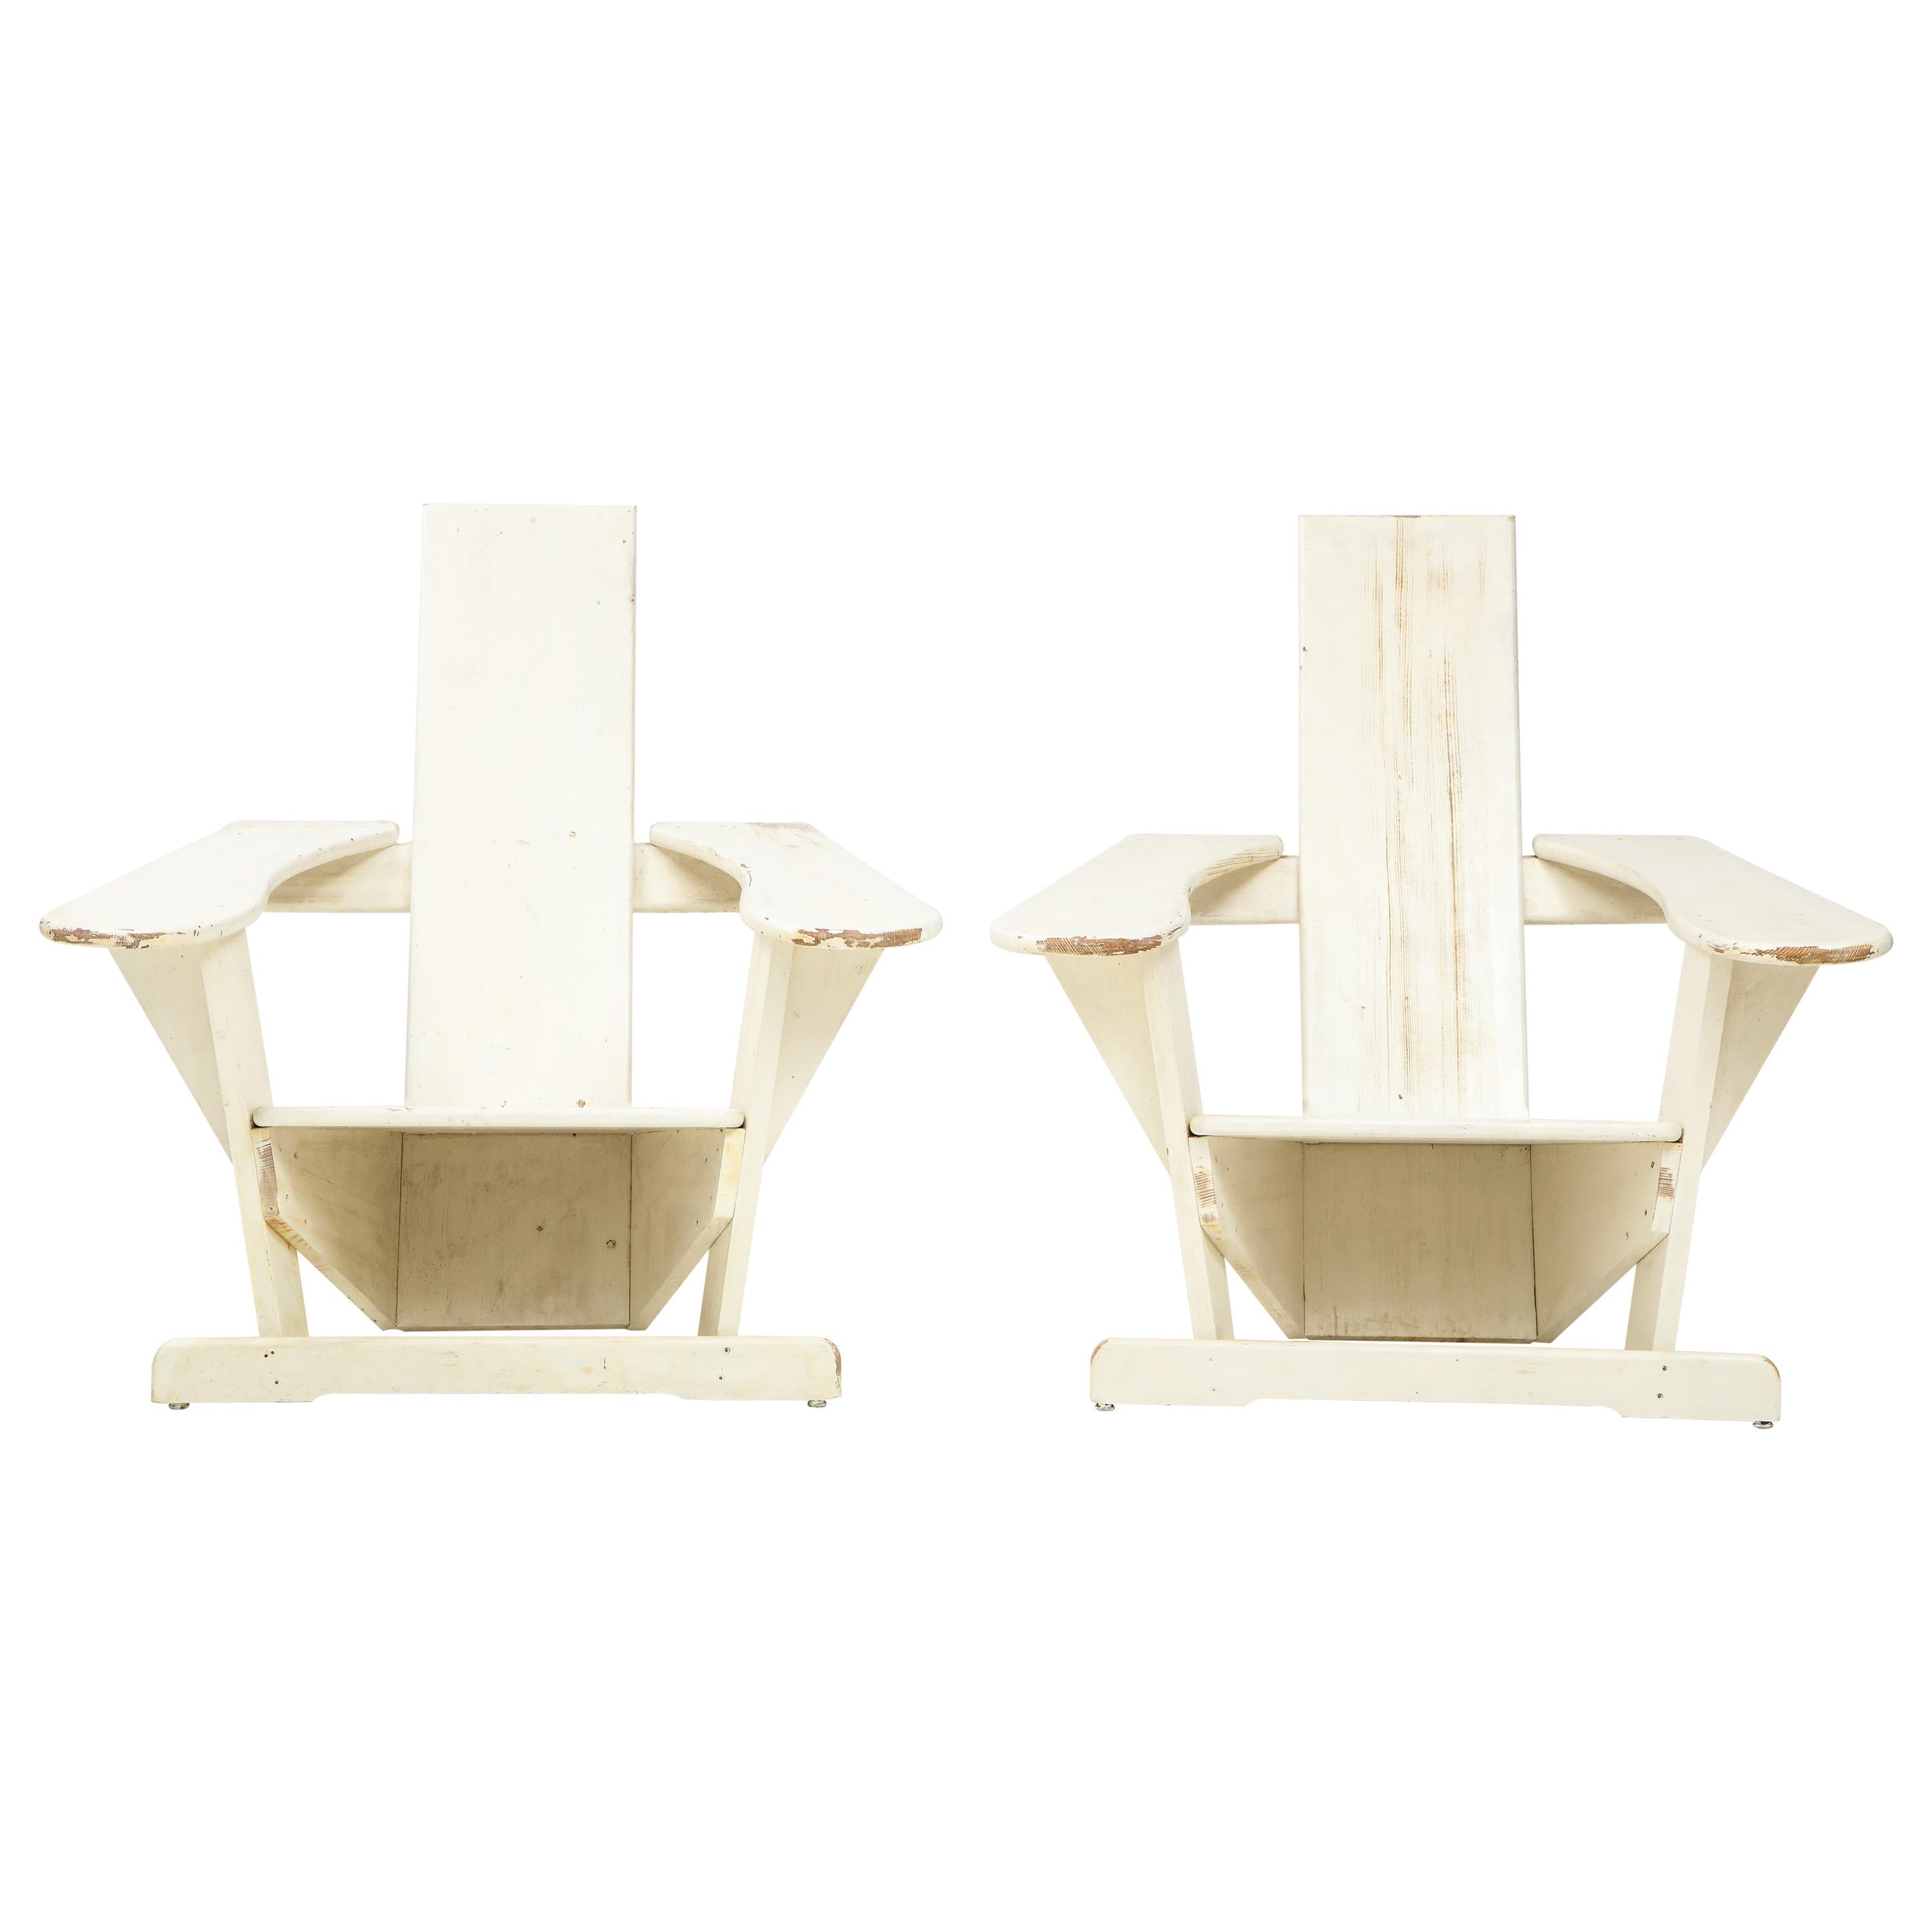 Pair of chairs after Pierre Dariel, ‘Biarrtiz’ model, France, c. 1926
Measures: H 42.5, W 37.5, D 39.75 in. $9400 list for the pair

Bibliography: Dariel, Pierre, Commercial Catalogue, 1926, #30, pg. 14 

Exhibition: 'AD Intérieurs 2014’,